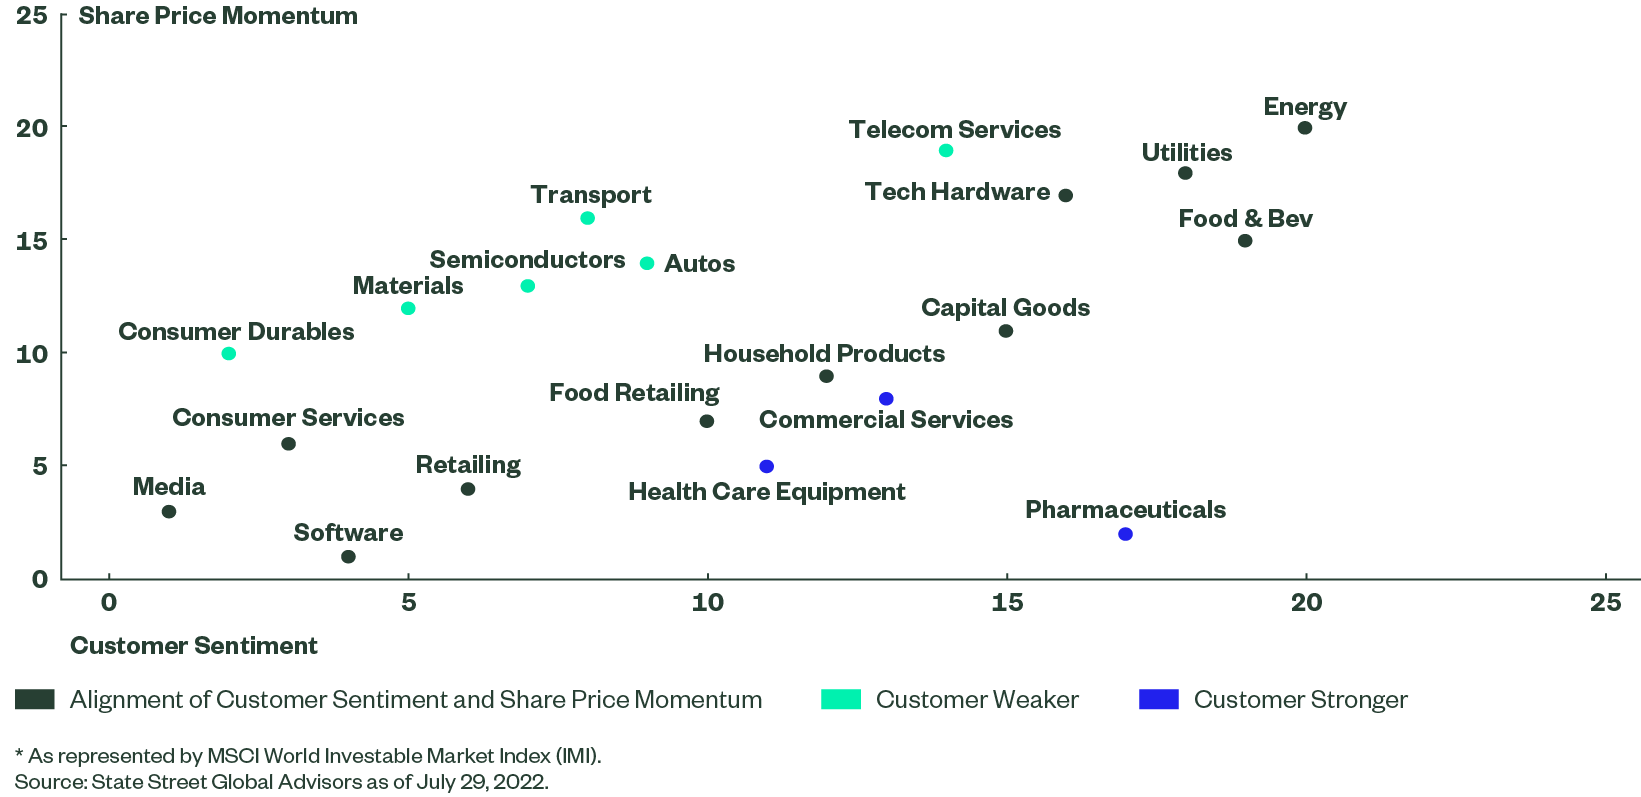 Share Price Momentum and Customer Sentiment Across Developed Market* Sectors